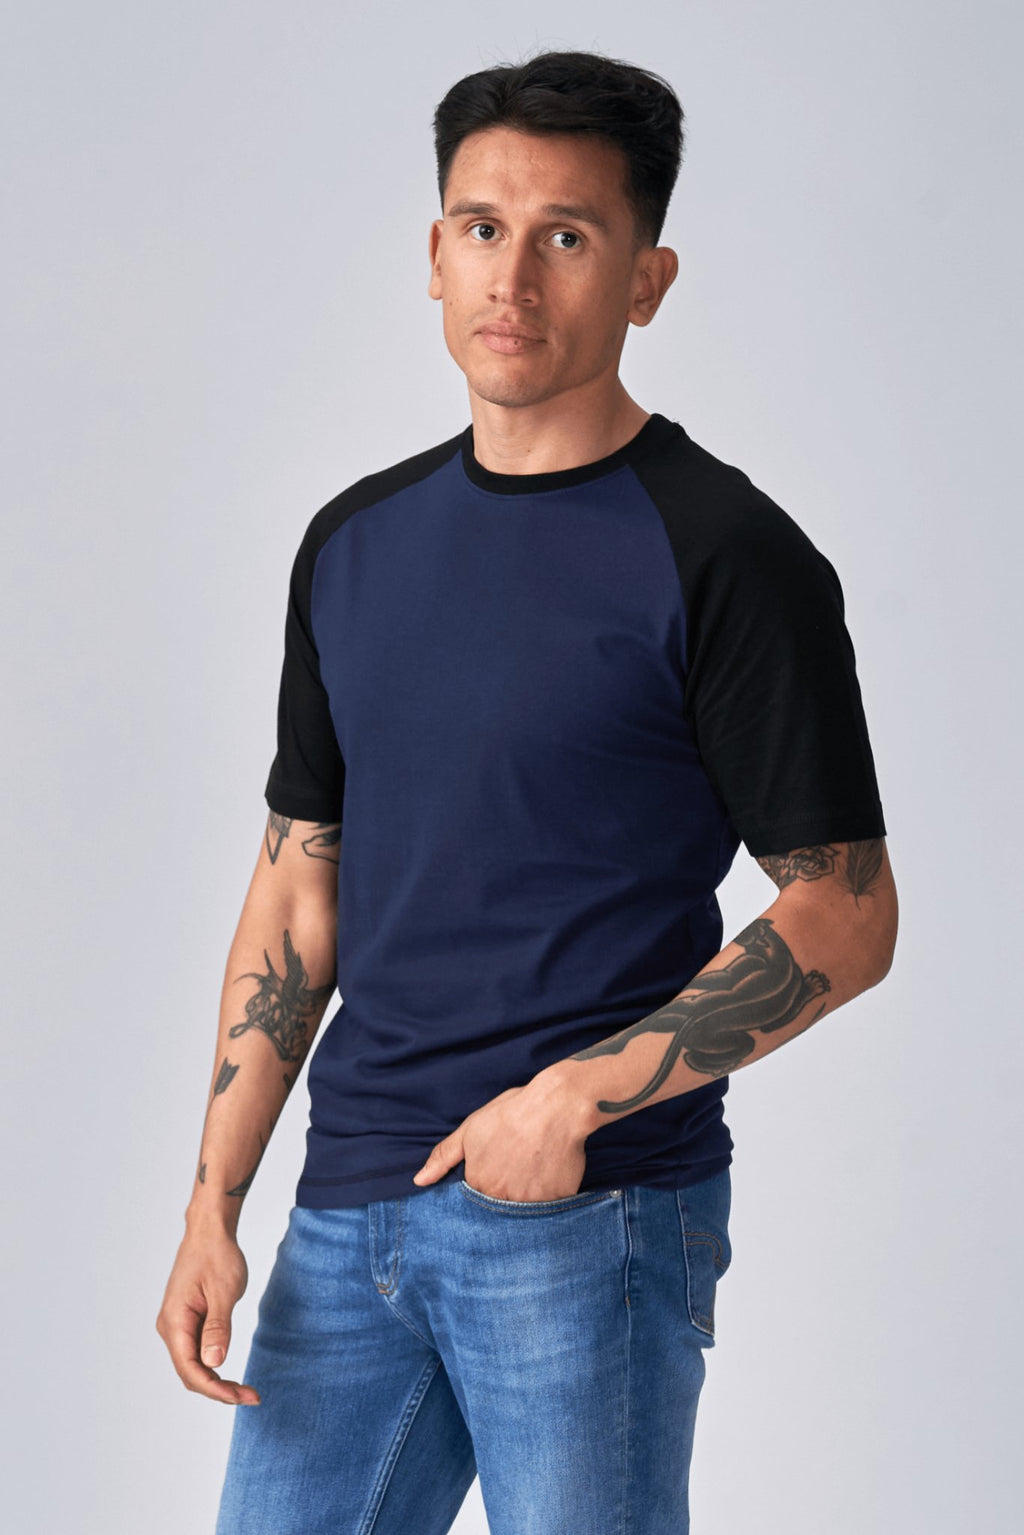 Camiseta básica de Raglan-Navy Black